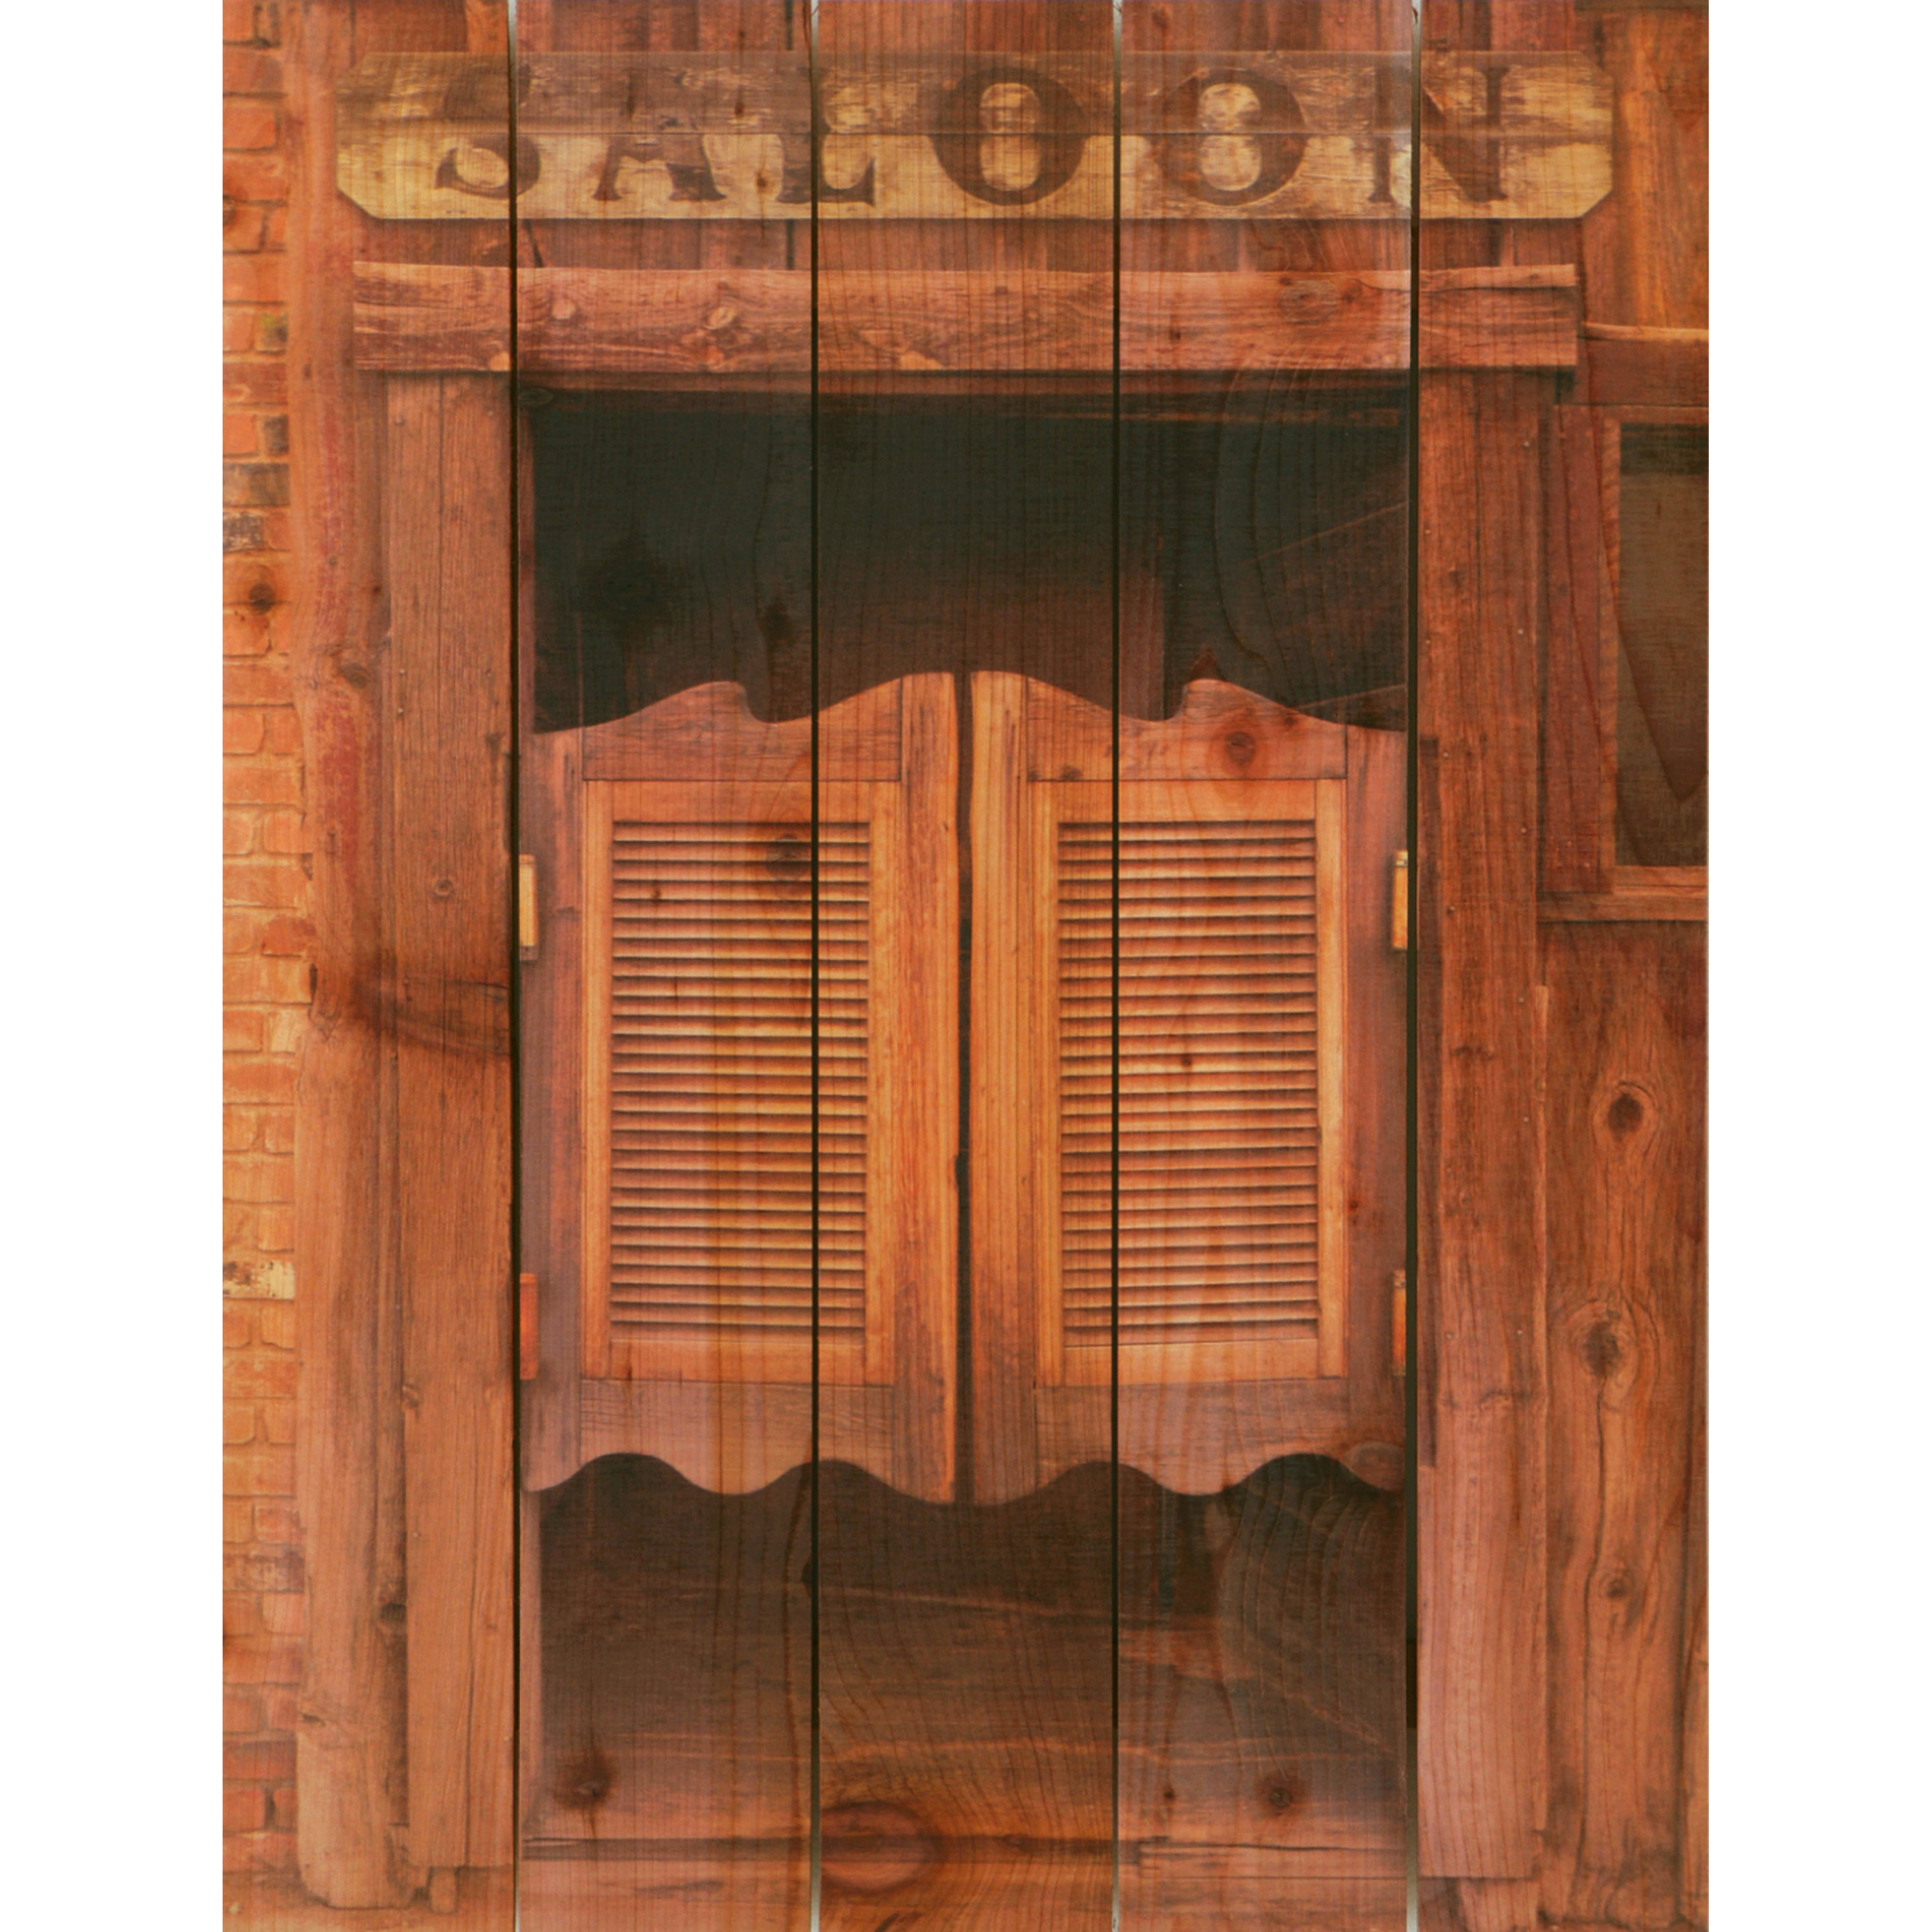 Daydream Gizaun Cedar Wall Art, Saloon Door, 16" X 24"